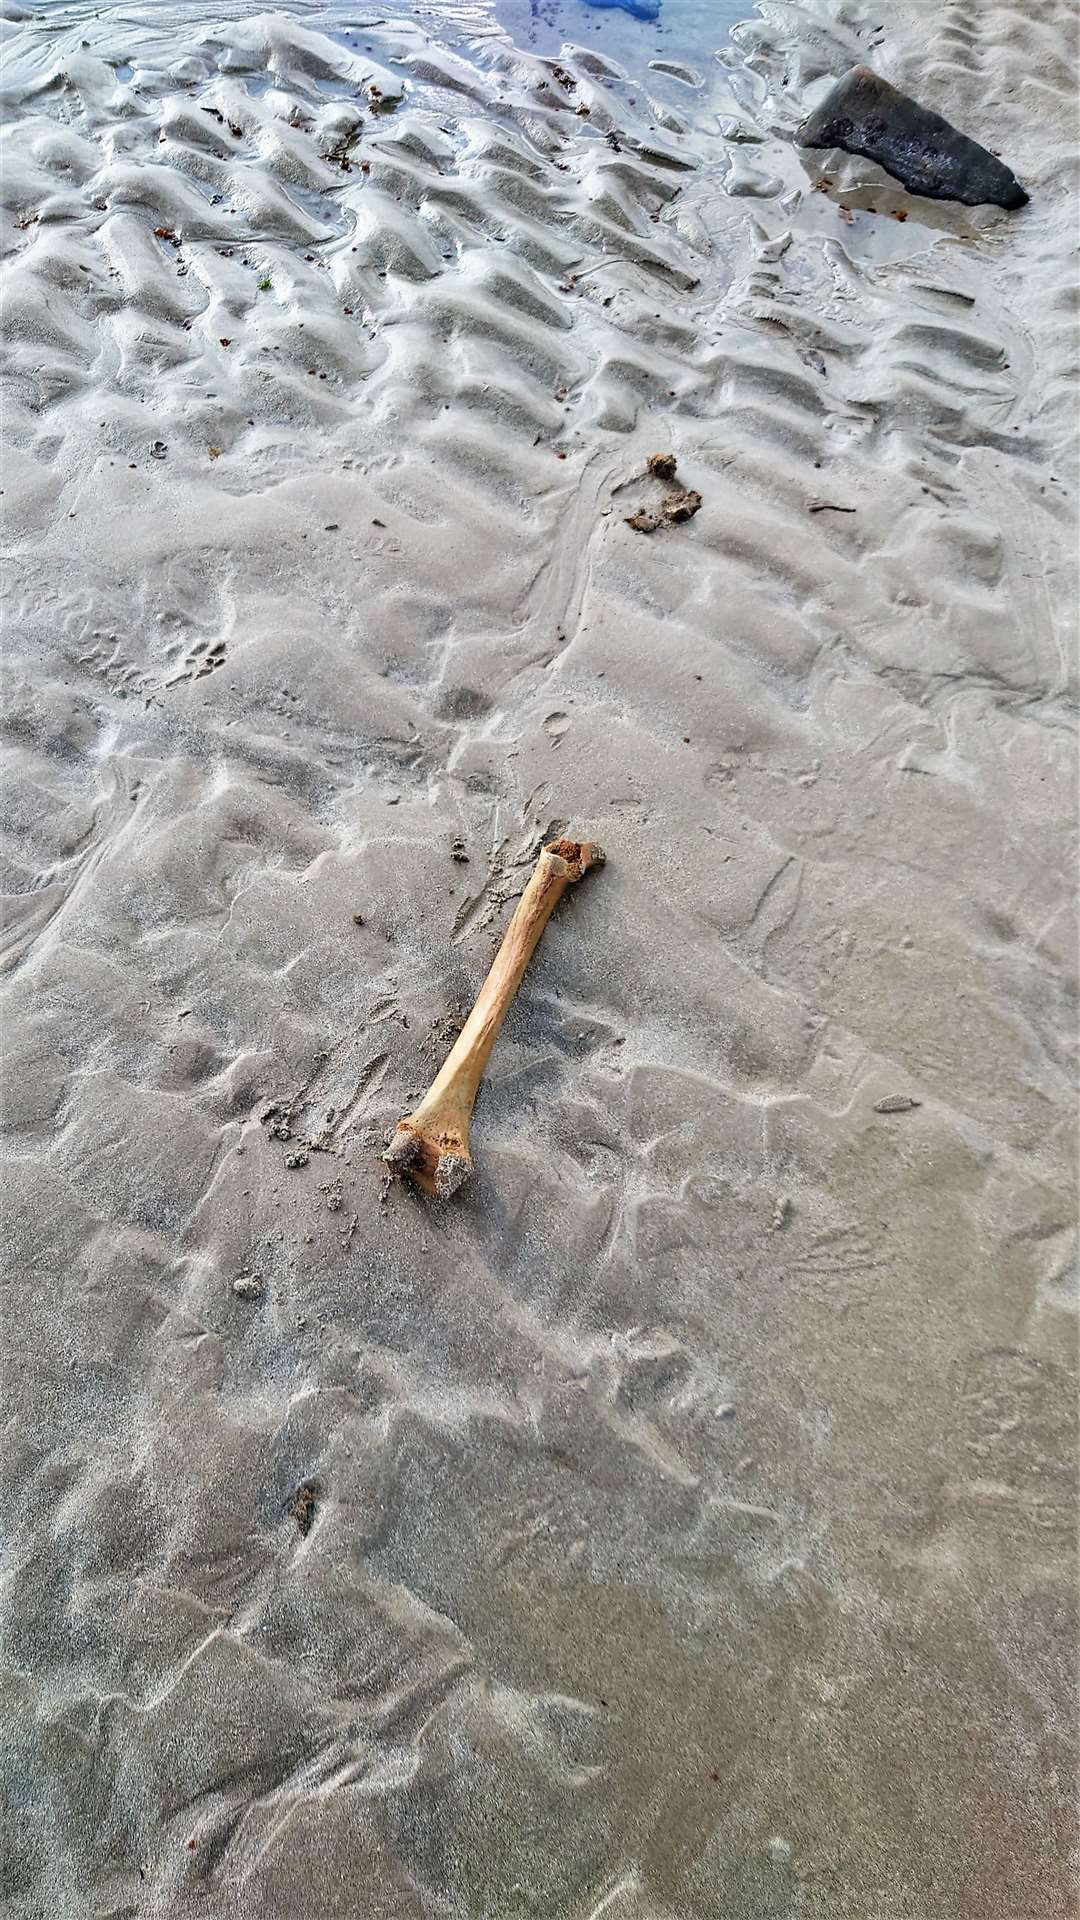 The 'human' bone in situ at Dunnet beach. Picture: Martin Gauer